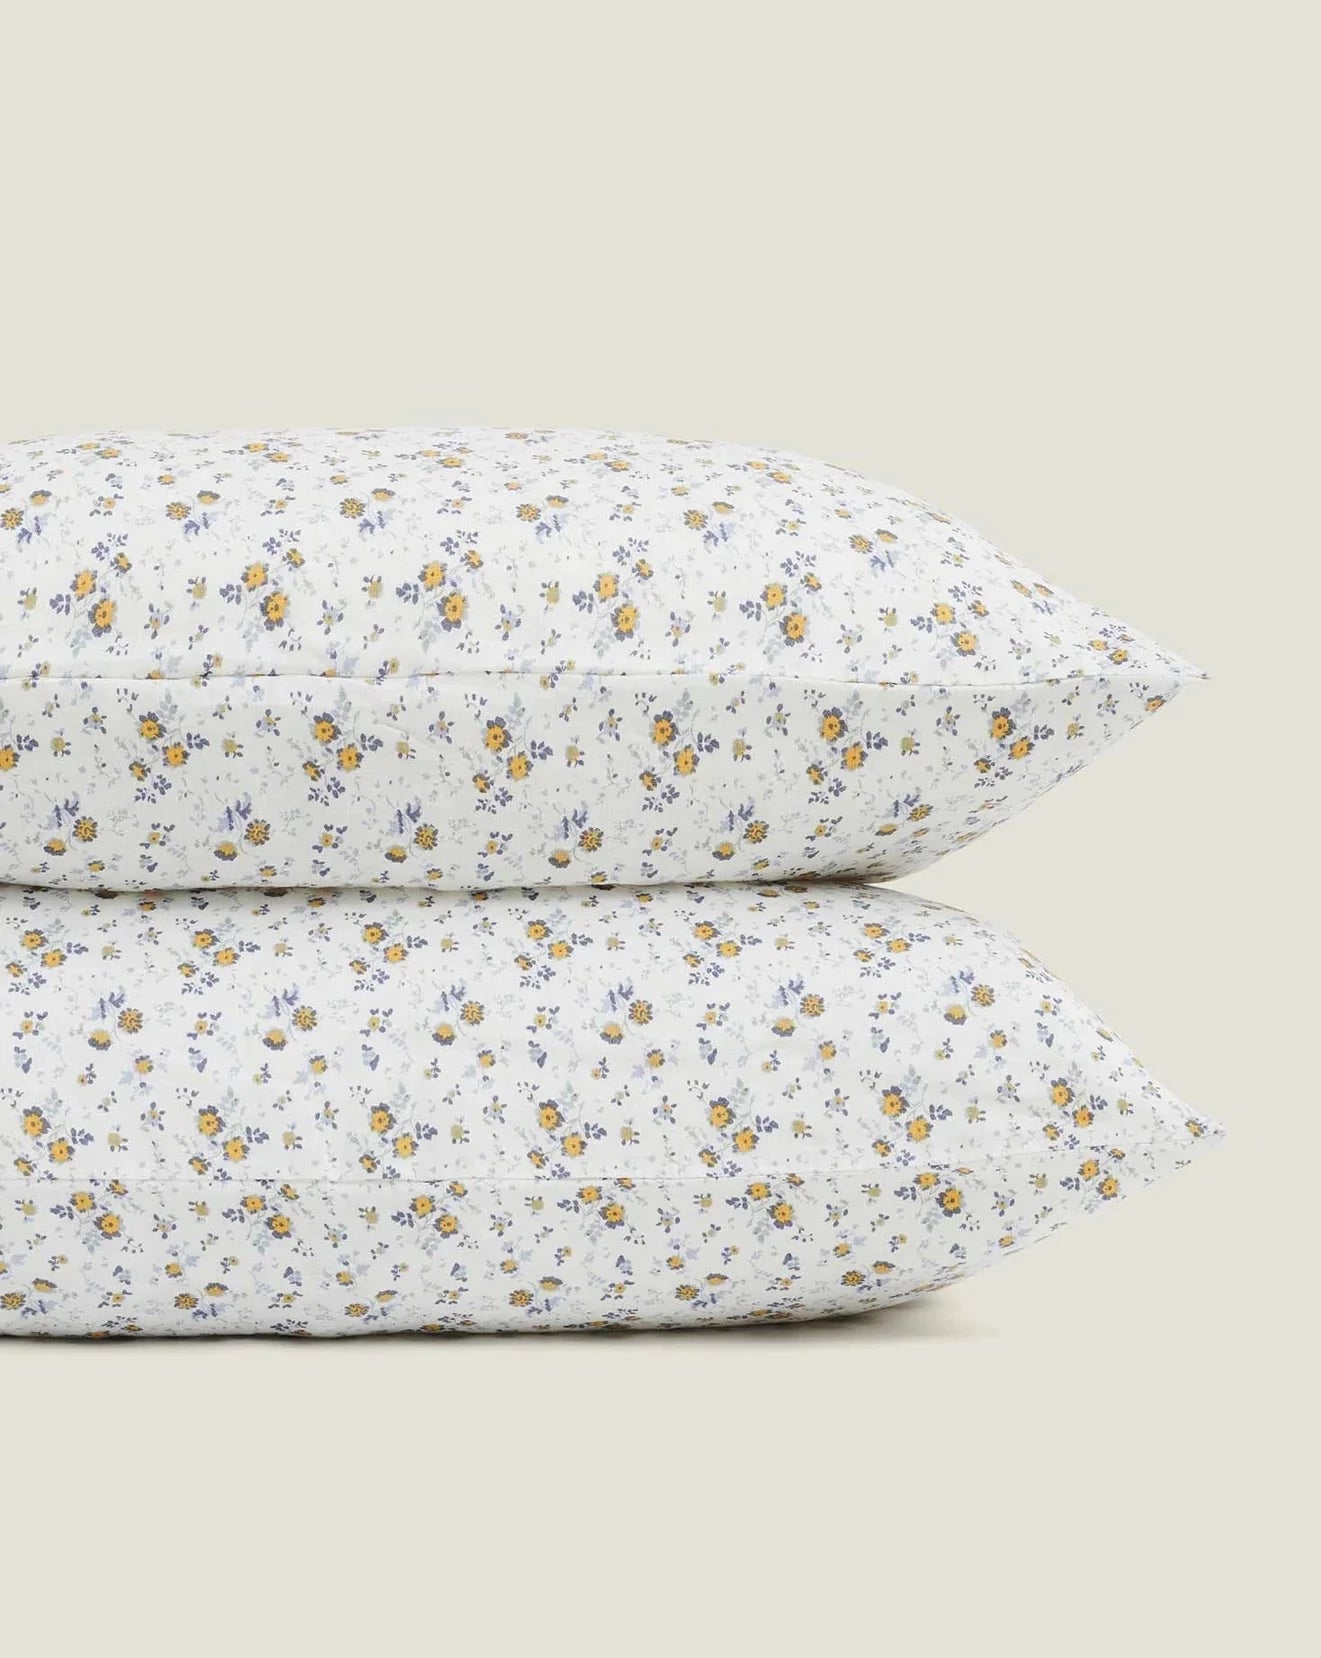 Linen Pillowcase Set of 2 in Summer Floral